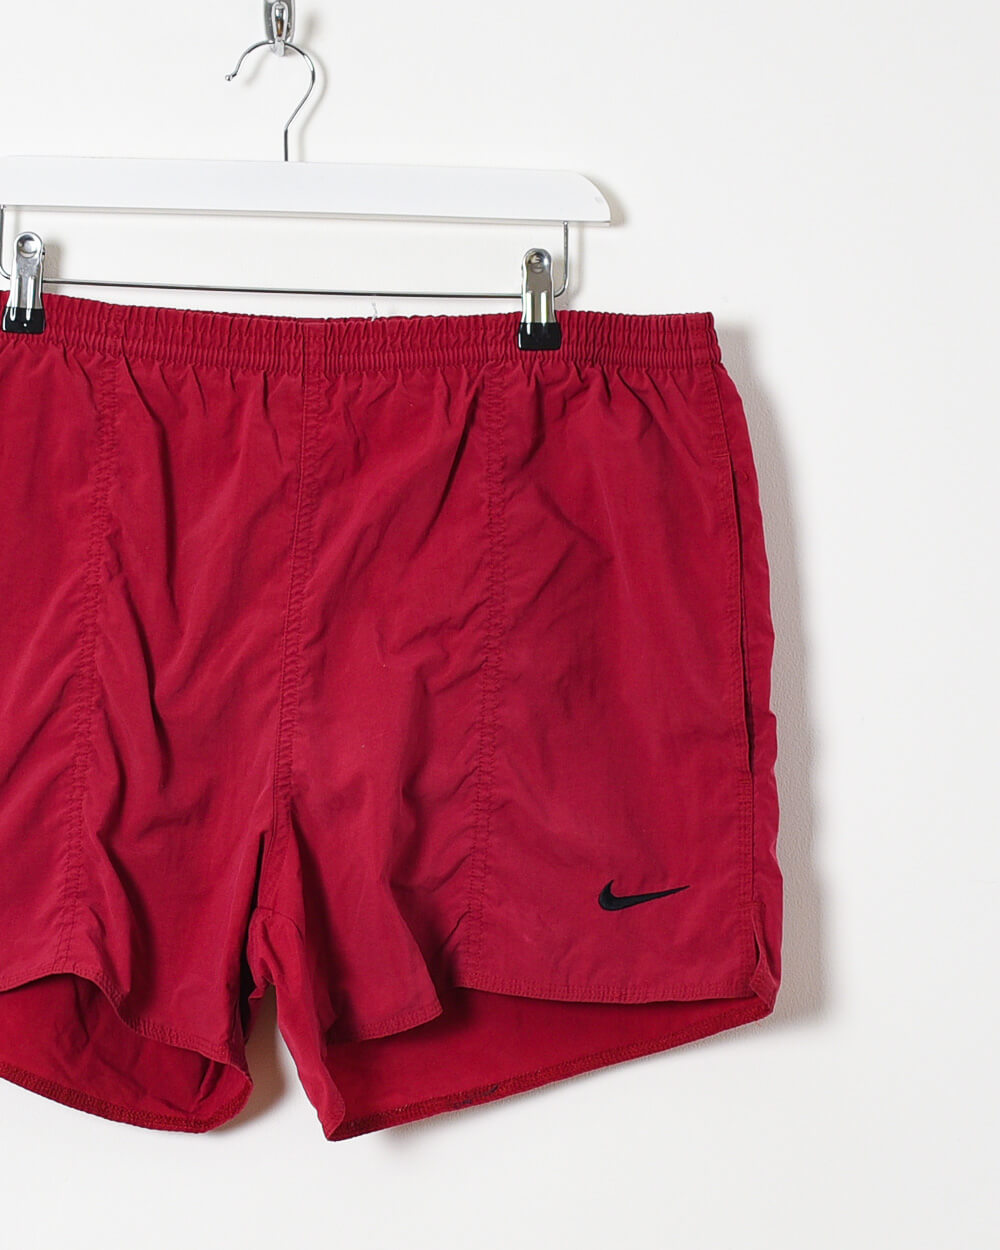 Maroon Nike Shorts - W36